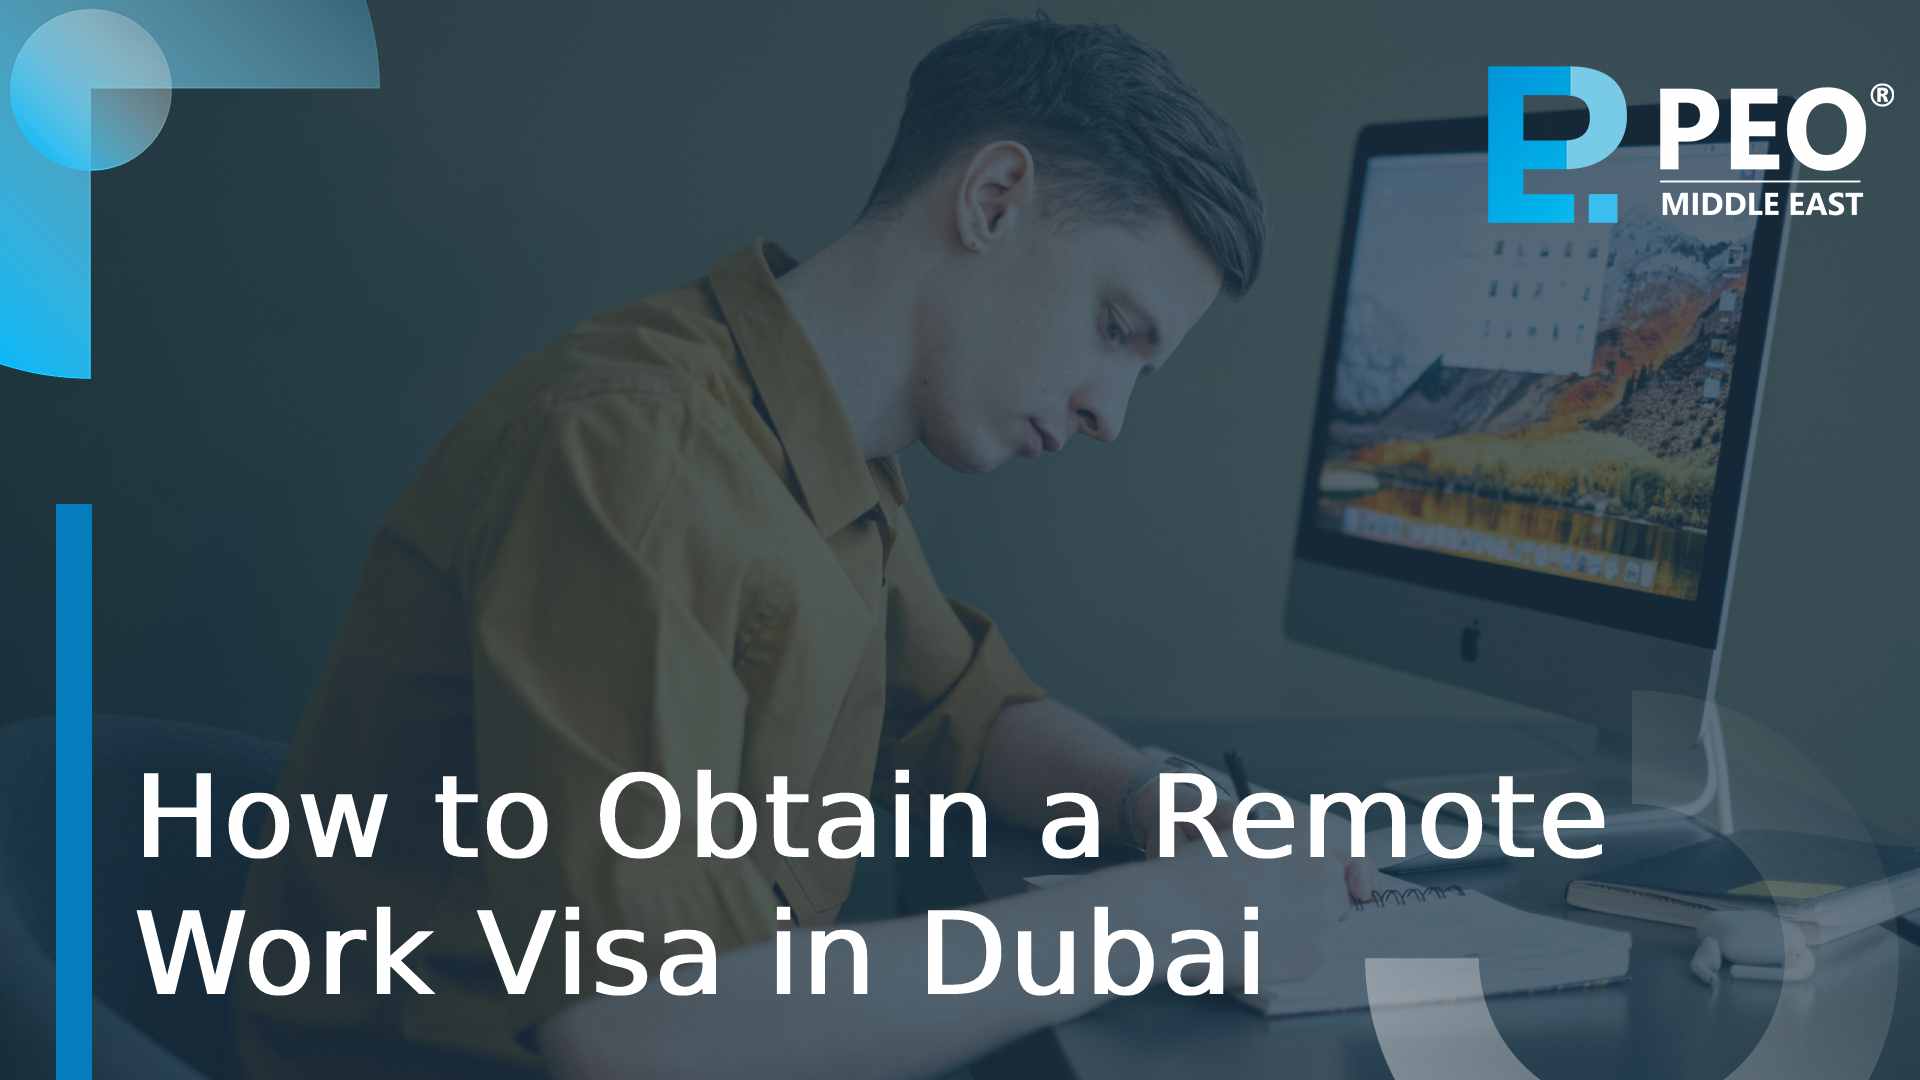 How to obtain a Remote Work Visa in Dubai